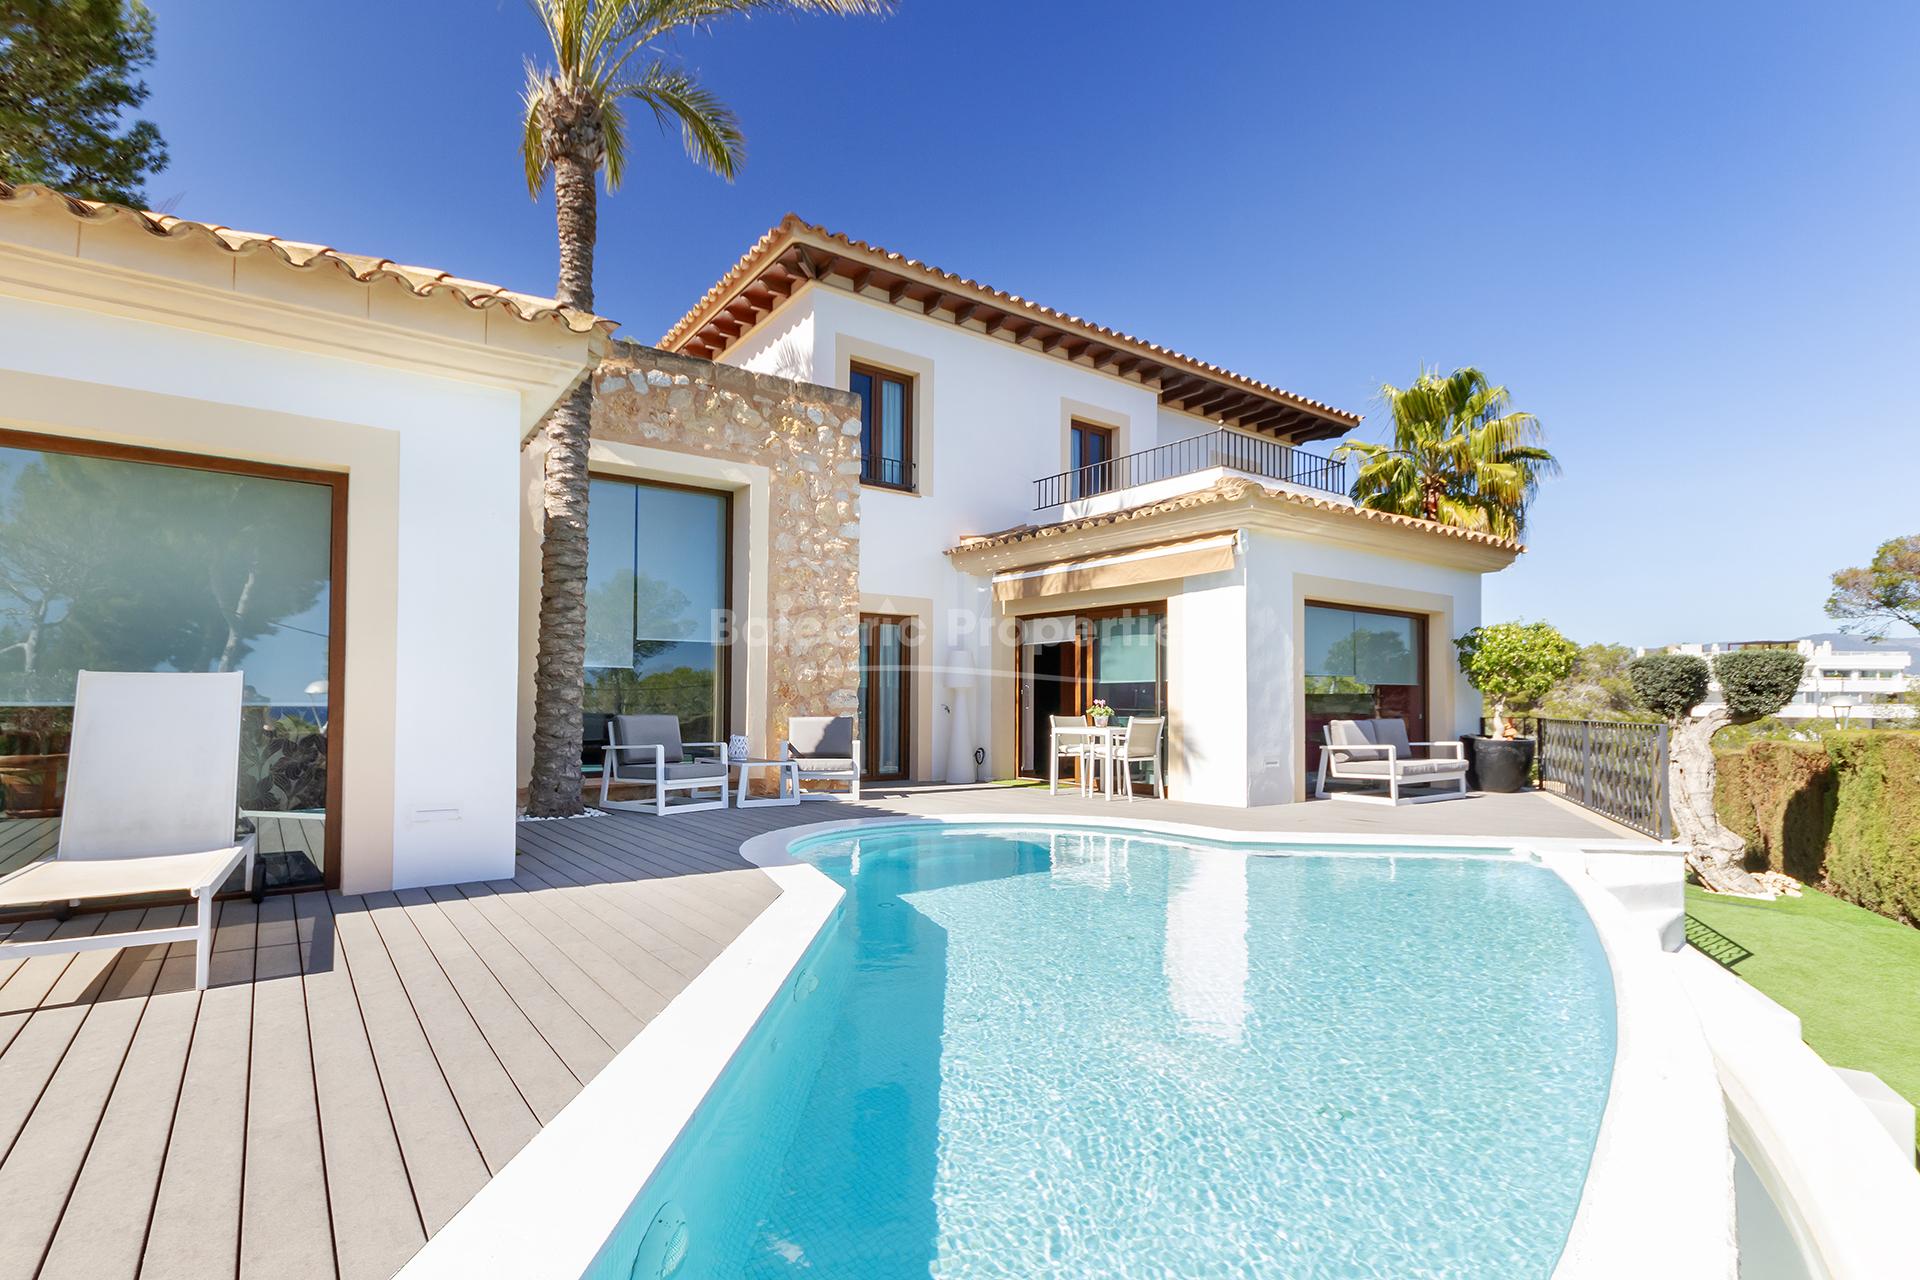 Elegant sea view villa for sale near the beach in Cala Vinyes, Mallorca